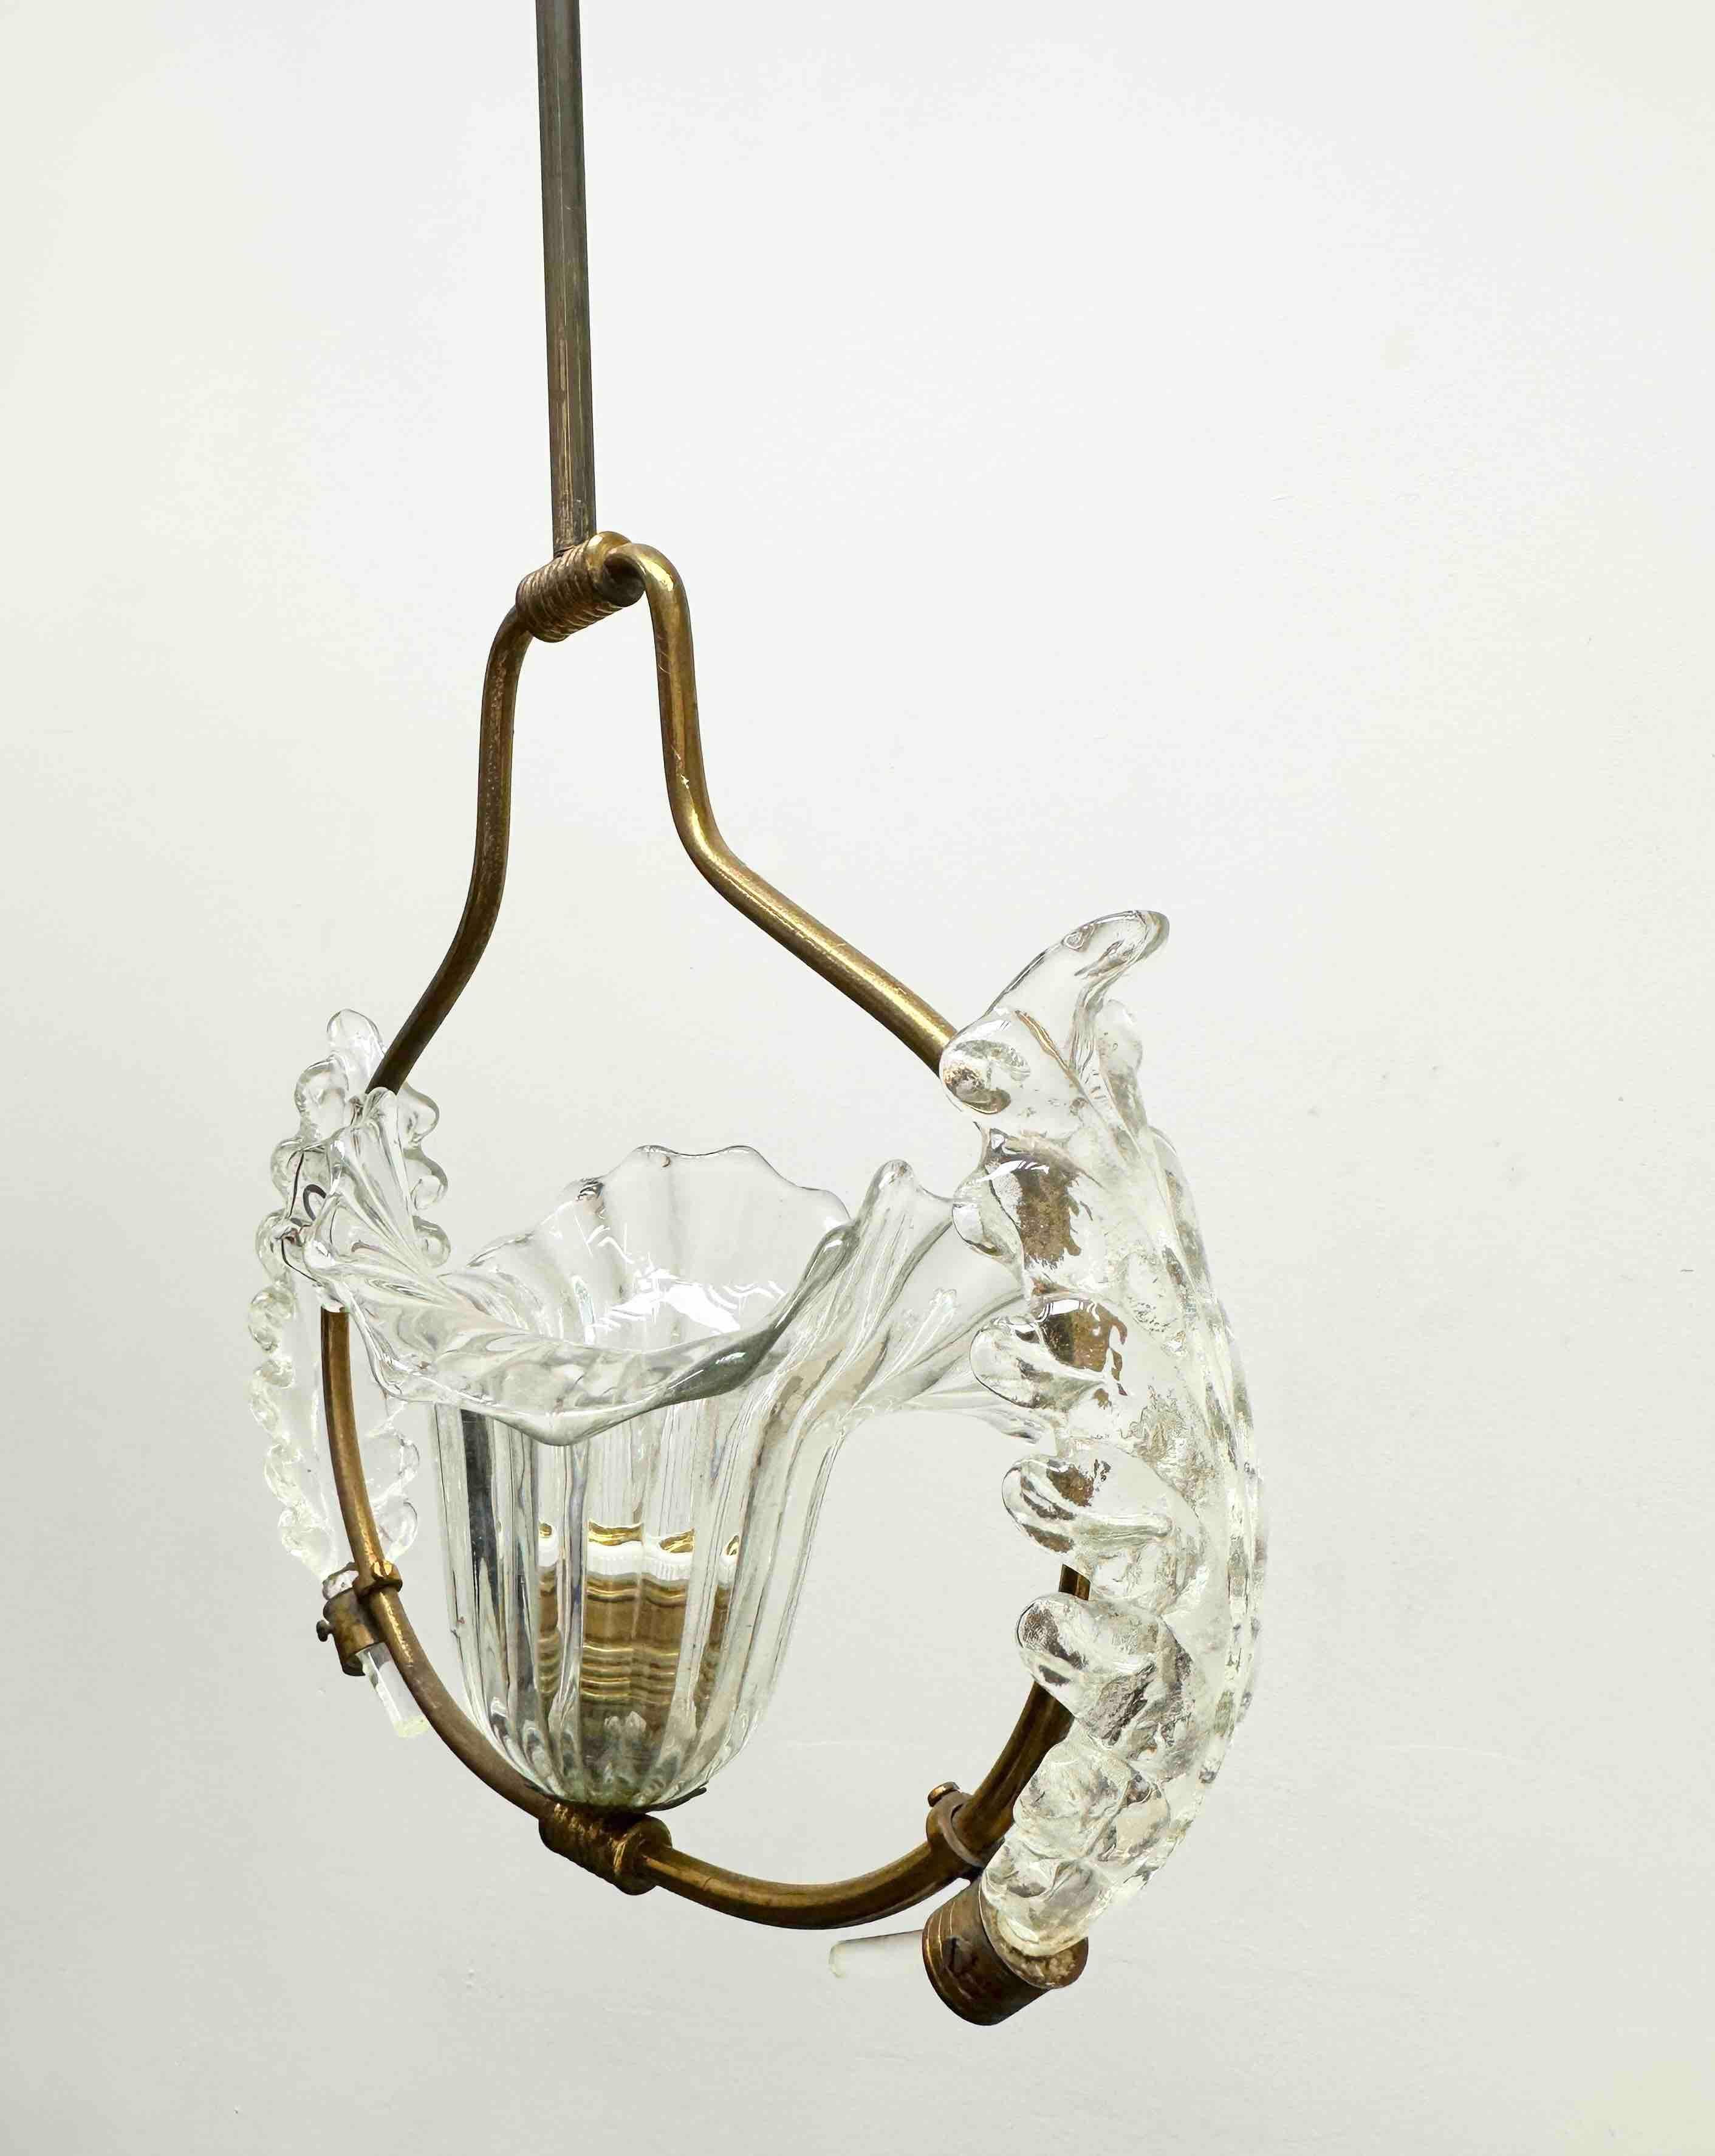 Petite Barovier Toso Pendant Light Chandelier Murano Glass Basket, 1950s For Sale 1